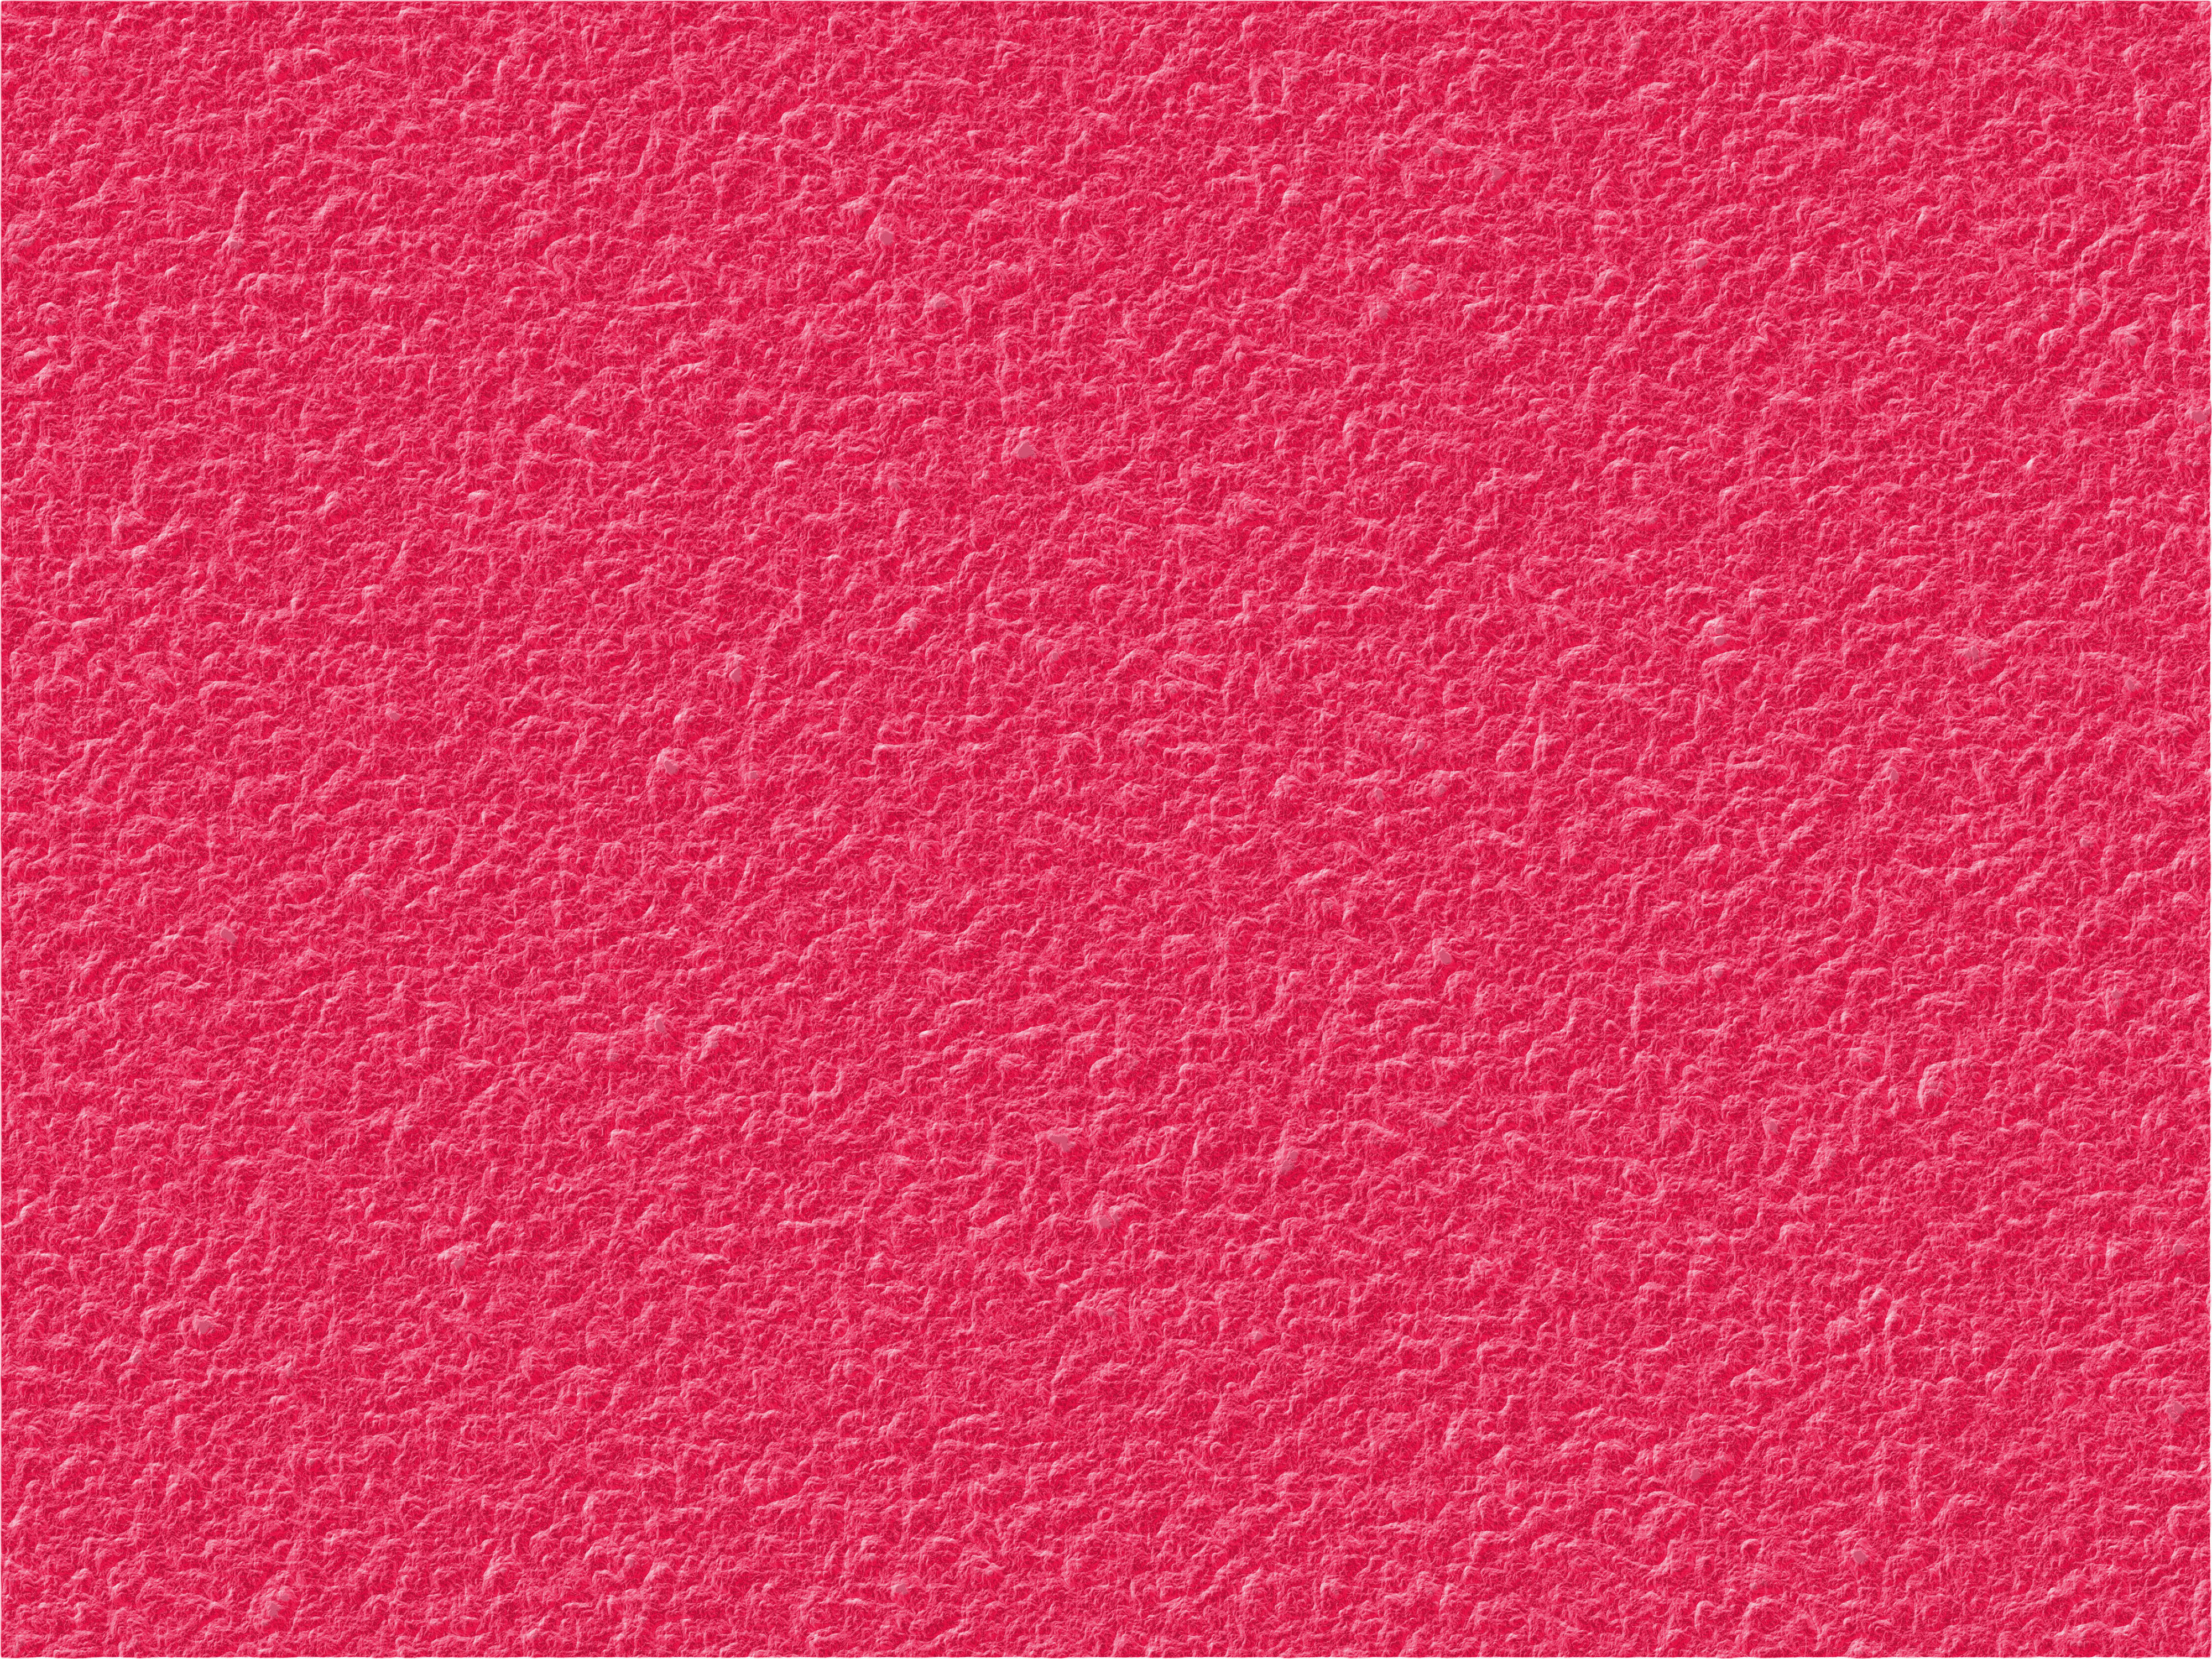 Hot pink plain background - 🧡 Pink Background Images (49+ images) .